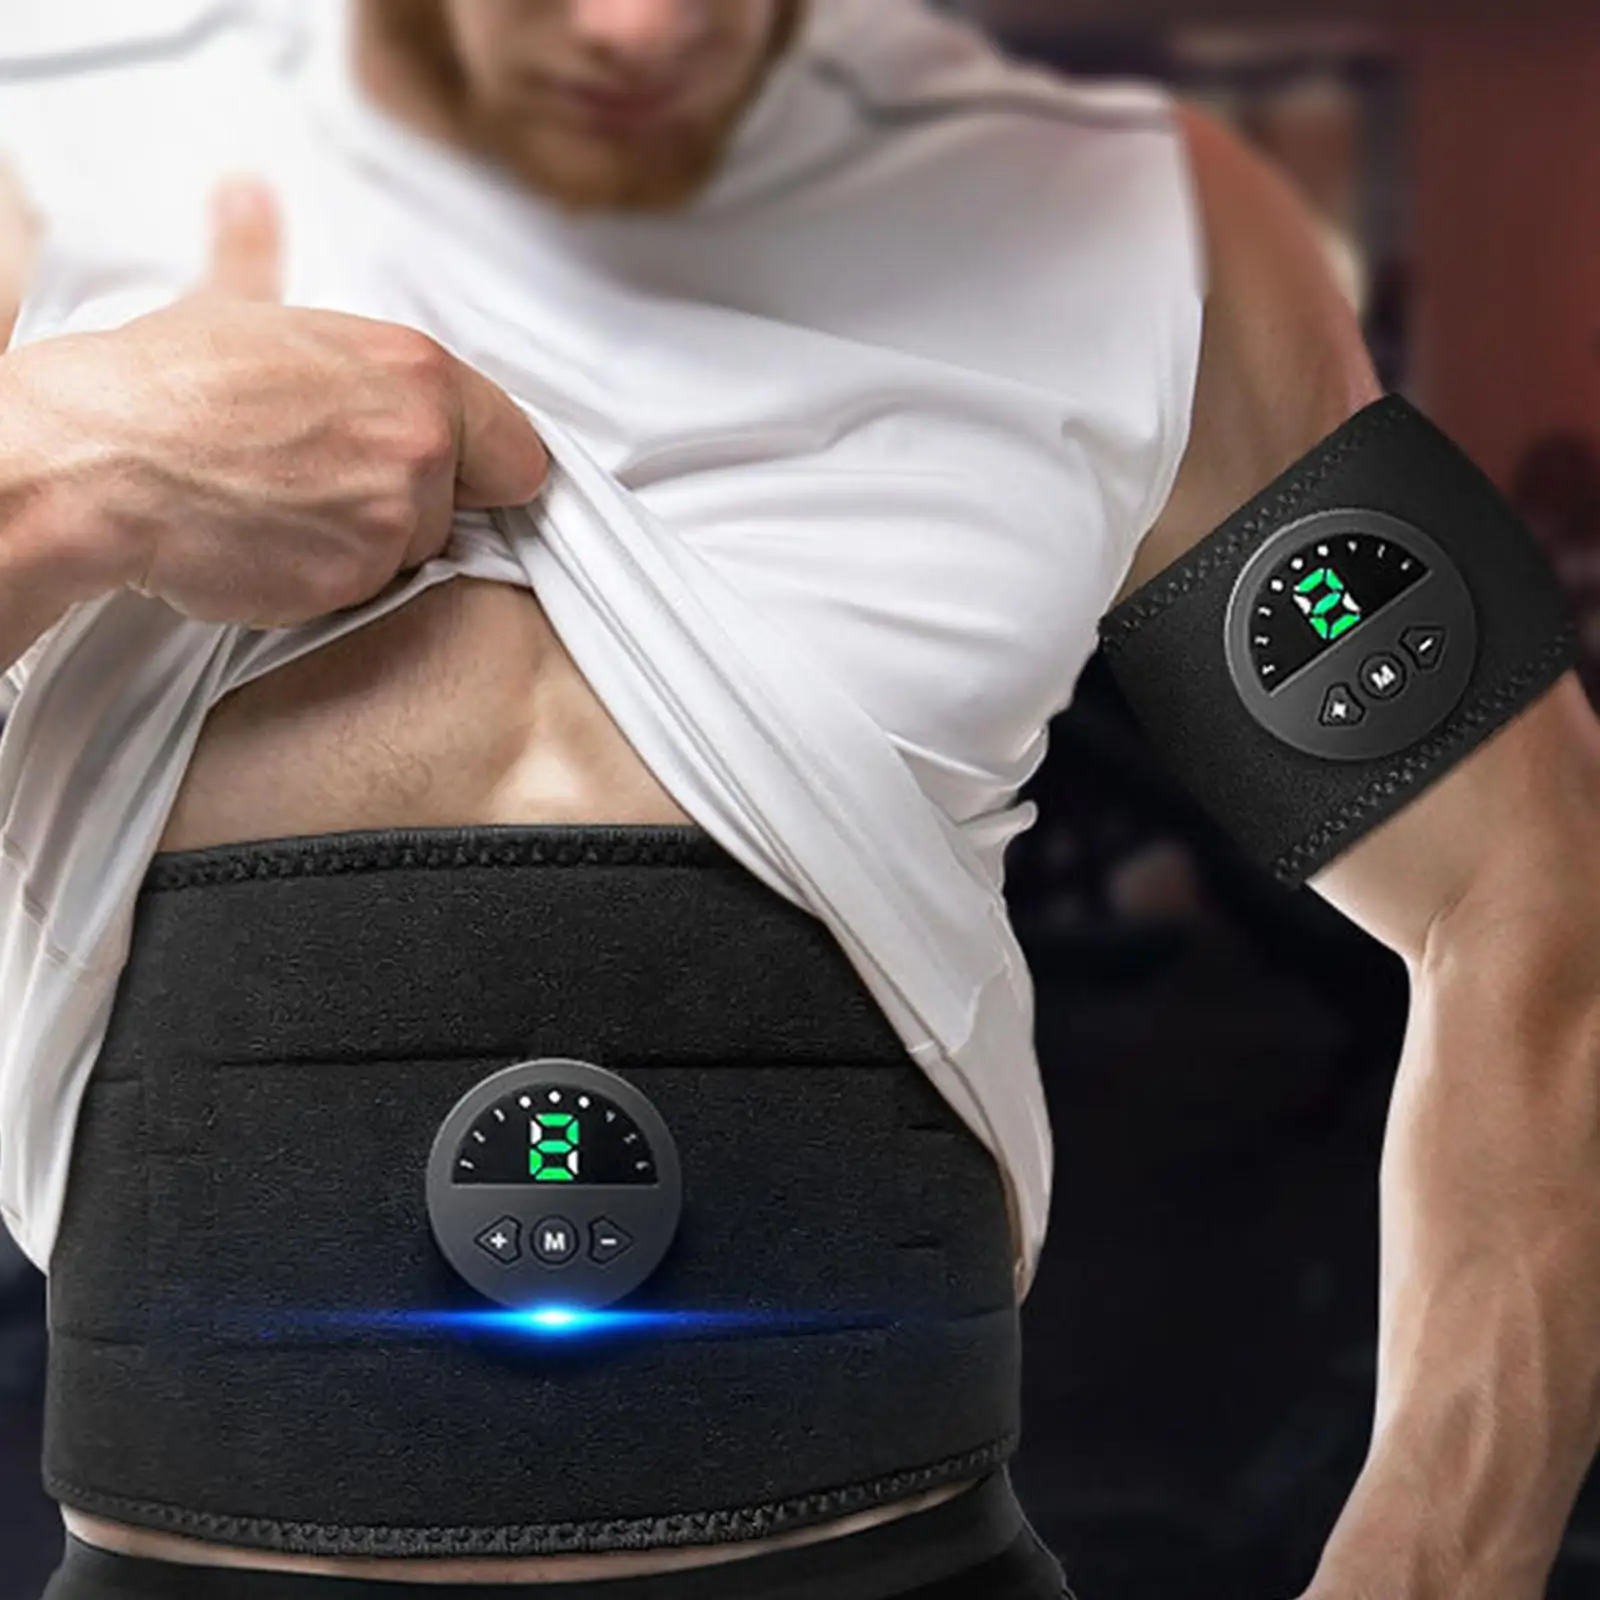 ABS Stimulating 6 Modes 9 intensities Abdominal Trainer Belt Gym Device Gear